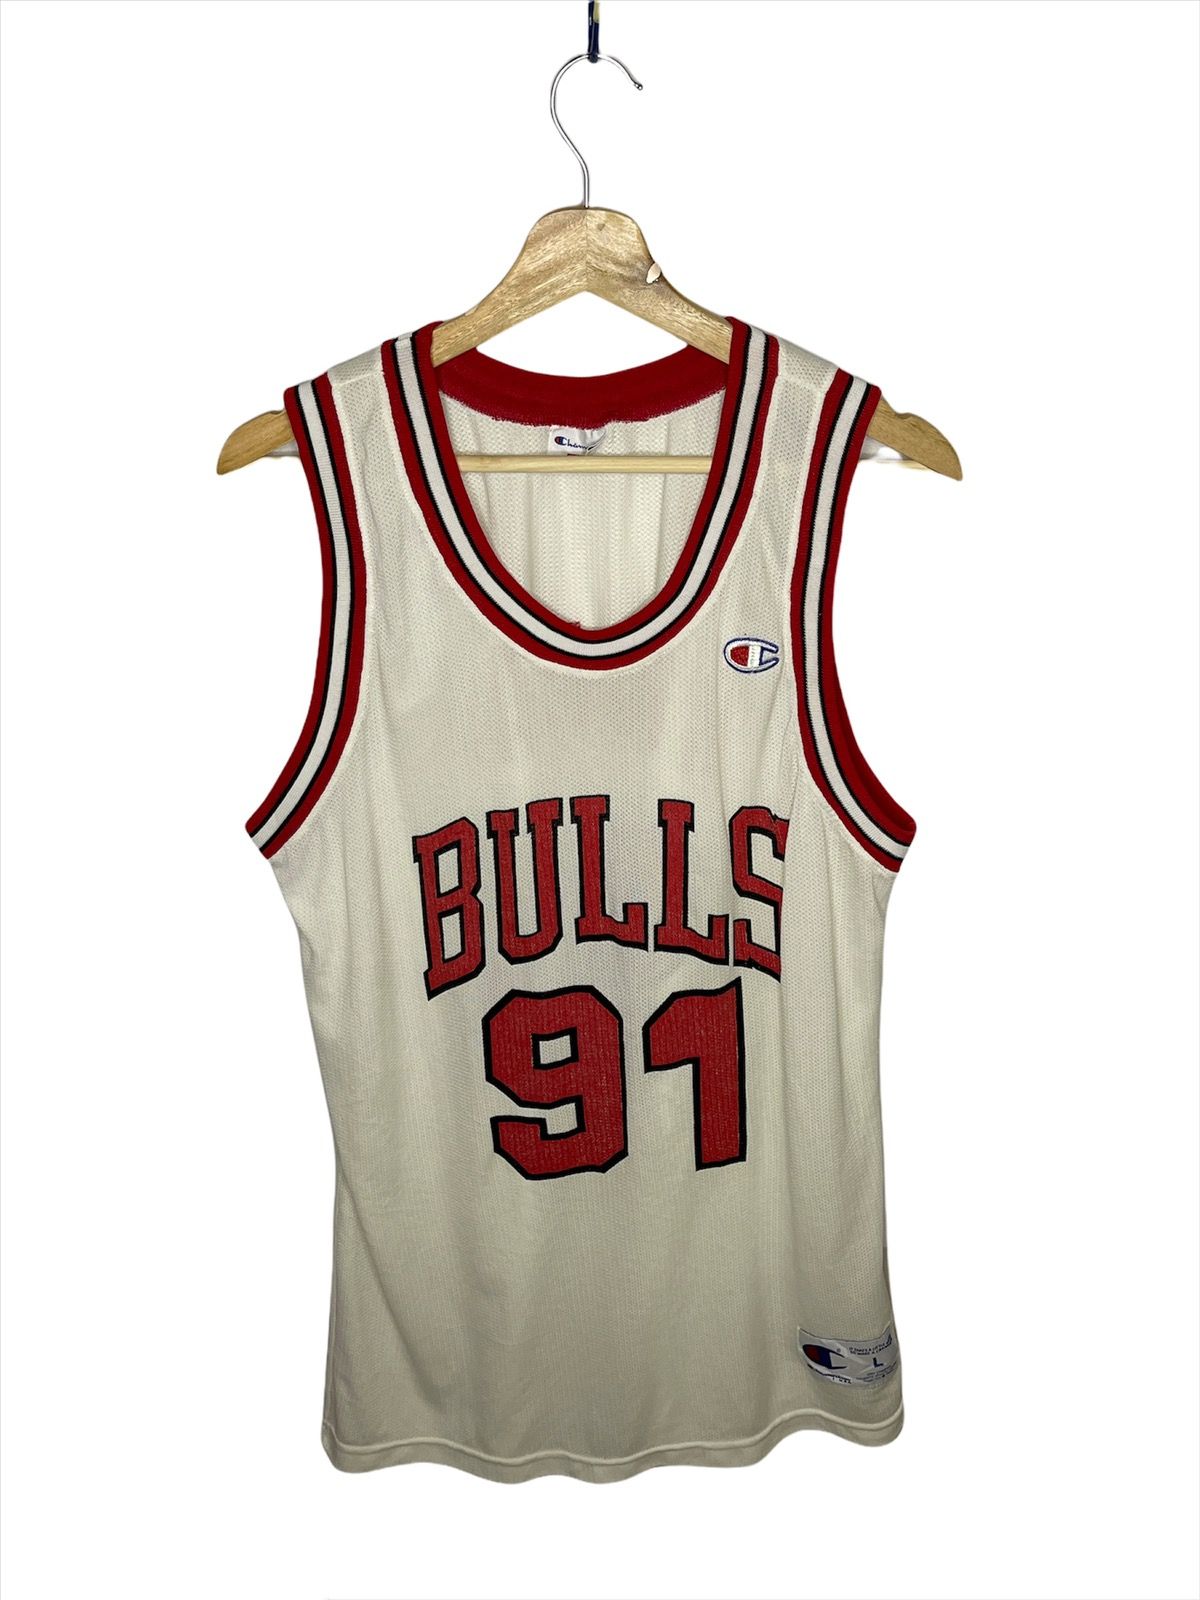 Red Chicago Bulls Rodman used Large Men's Champion Jersey